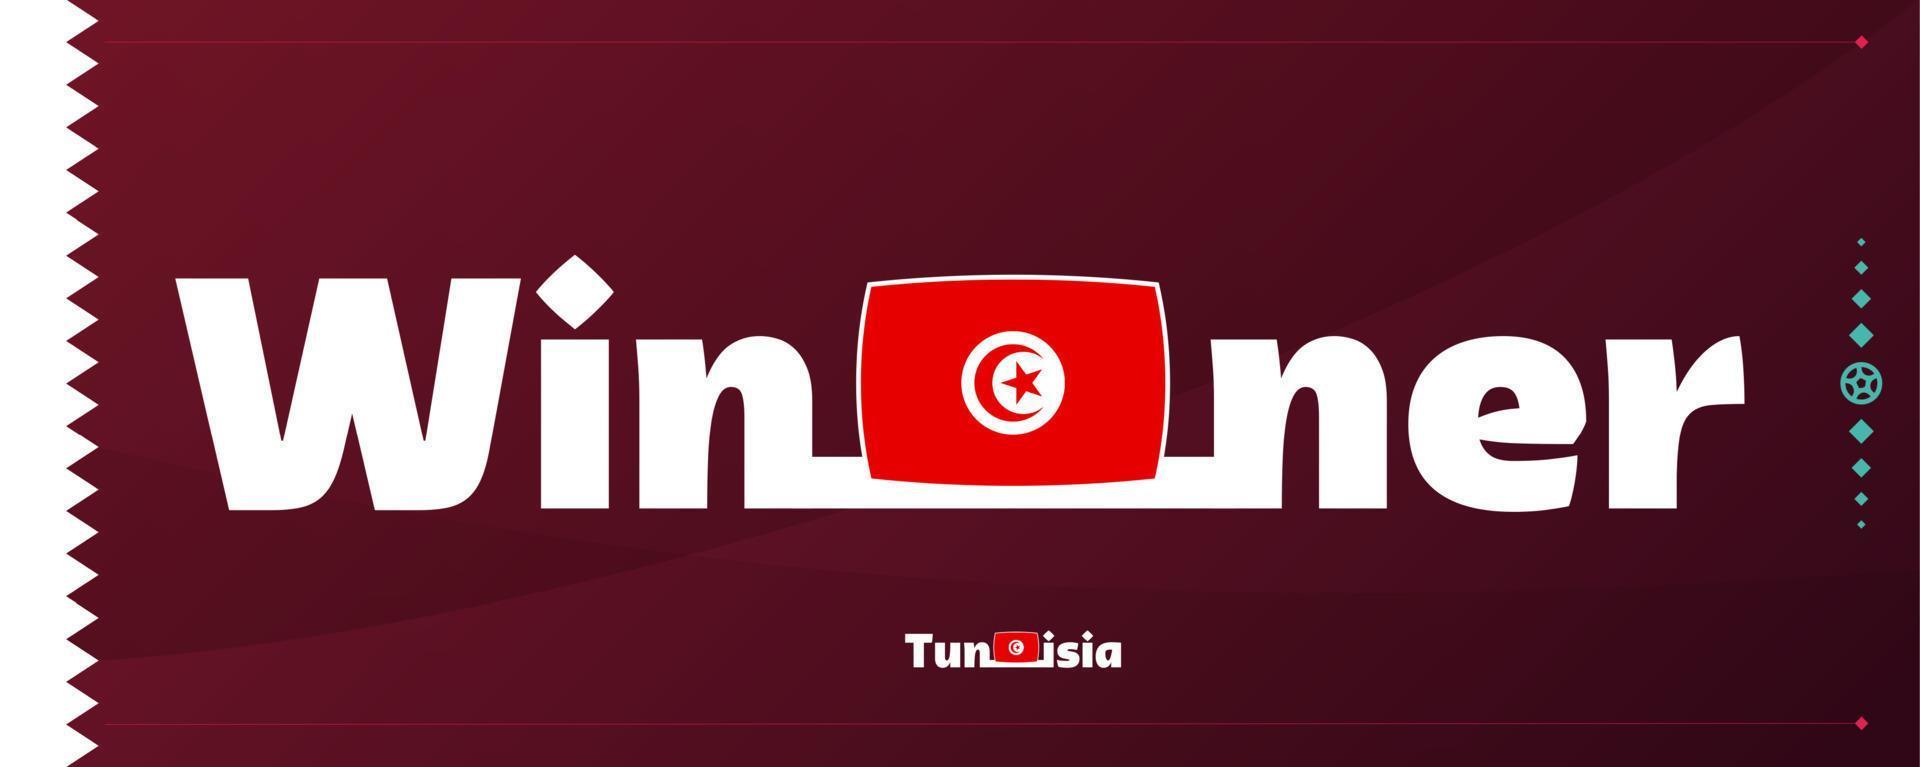 tunisia flag with winner slogan on football background. World Football 2022 tournament vector illustration